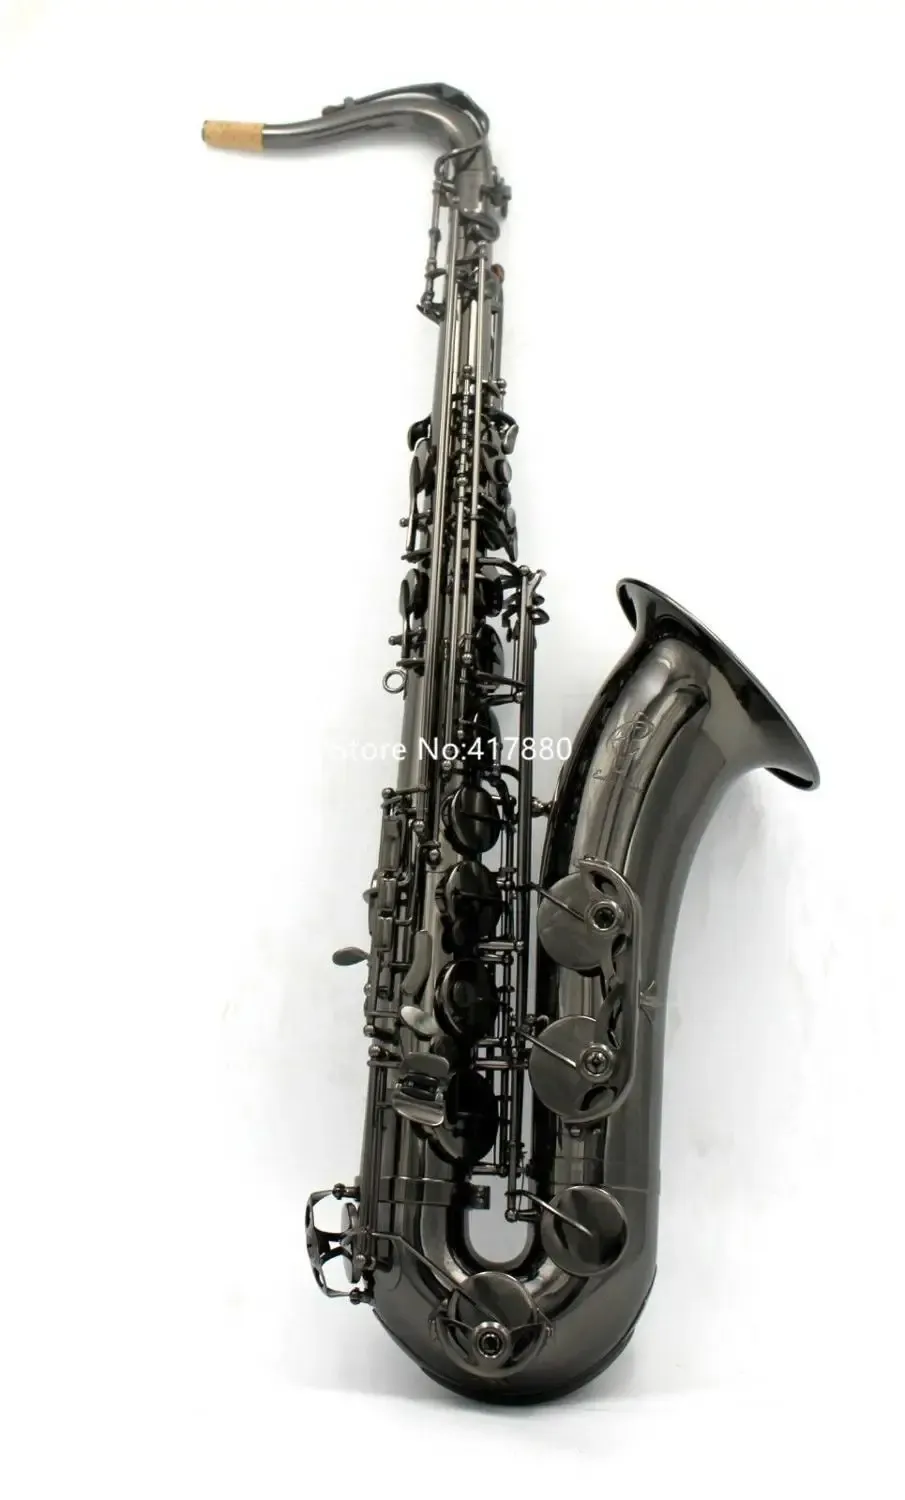 Saxophone neuf Tenor saxophone BB Tune Full Body and Keys Black Nickel Musical Instrument avec cas Livraison gratuite